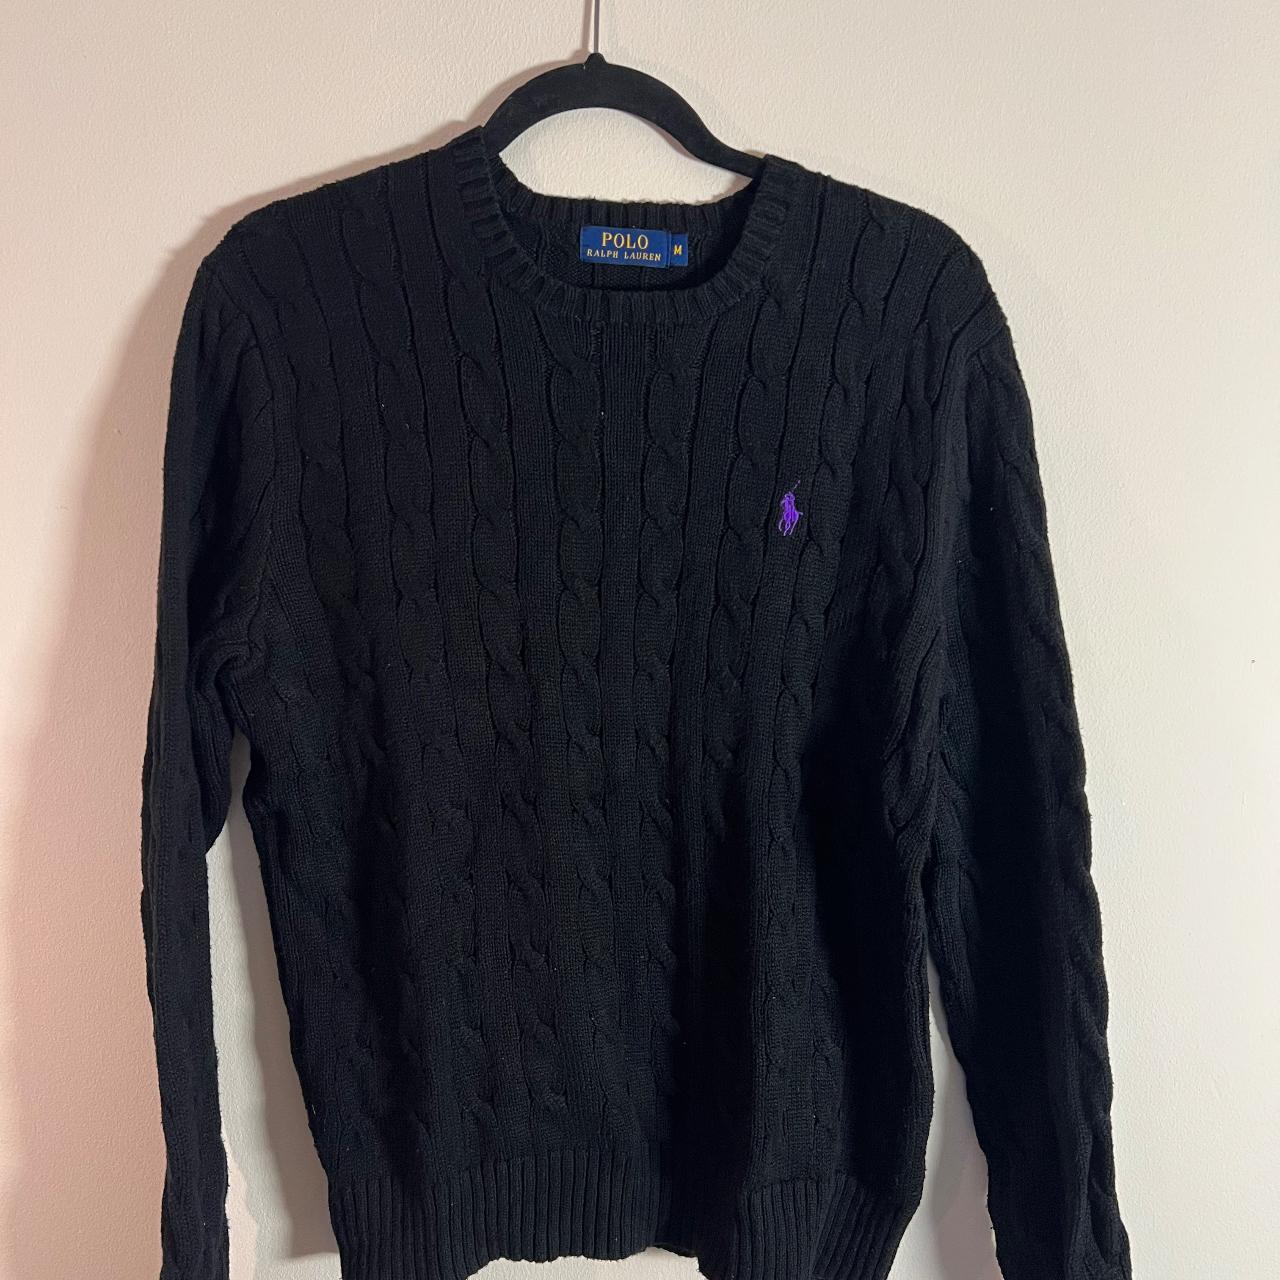 Polo Ralph Lauren cable knit sweater - Depop